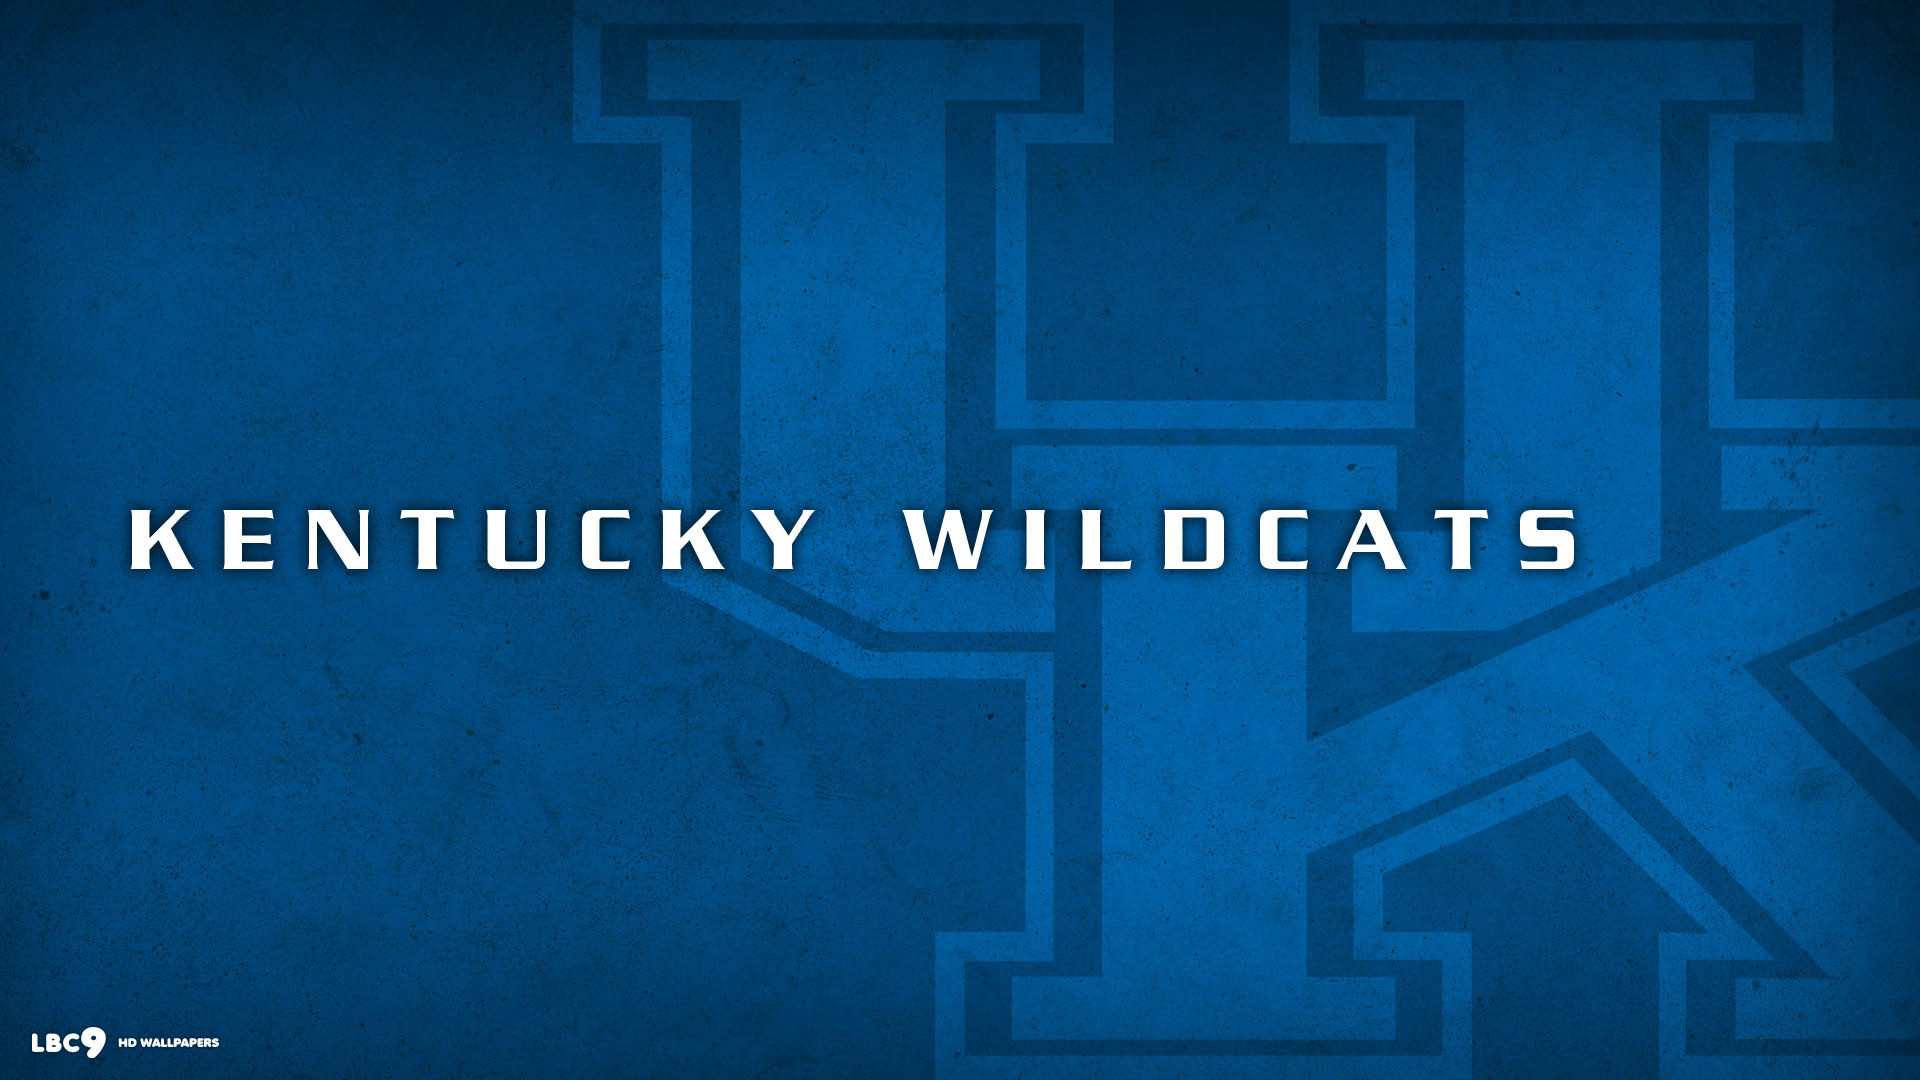 Kentucky wildcats wallpaper 5 / 7 college athletics hd backgrounds